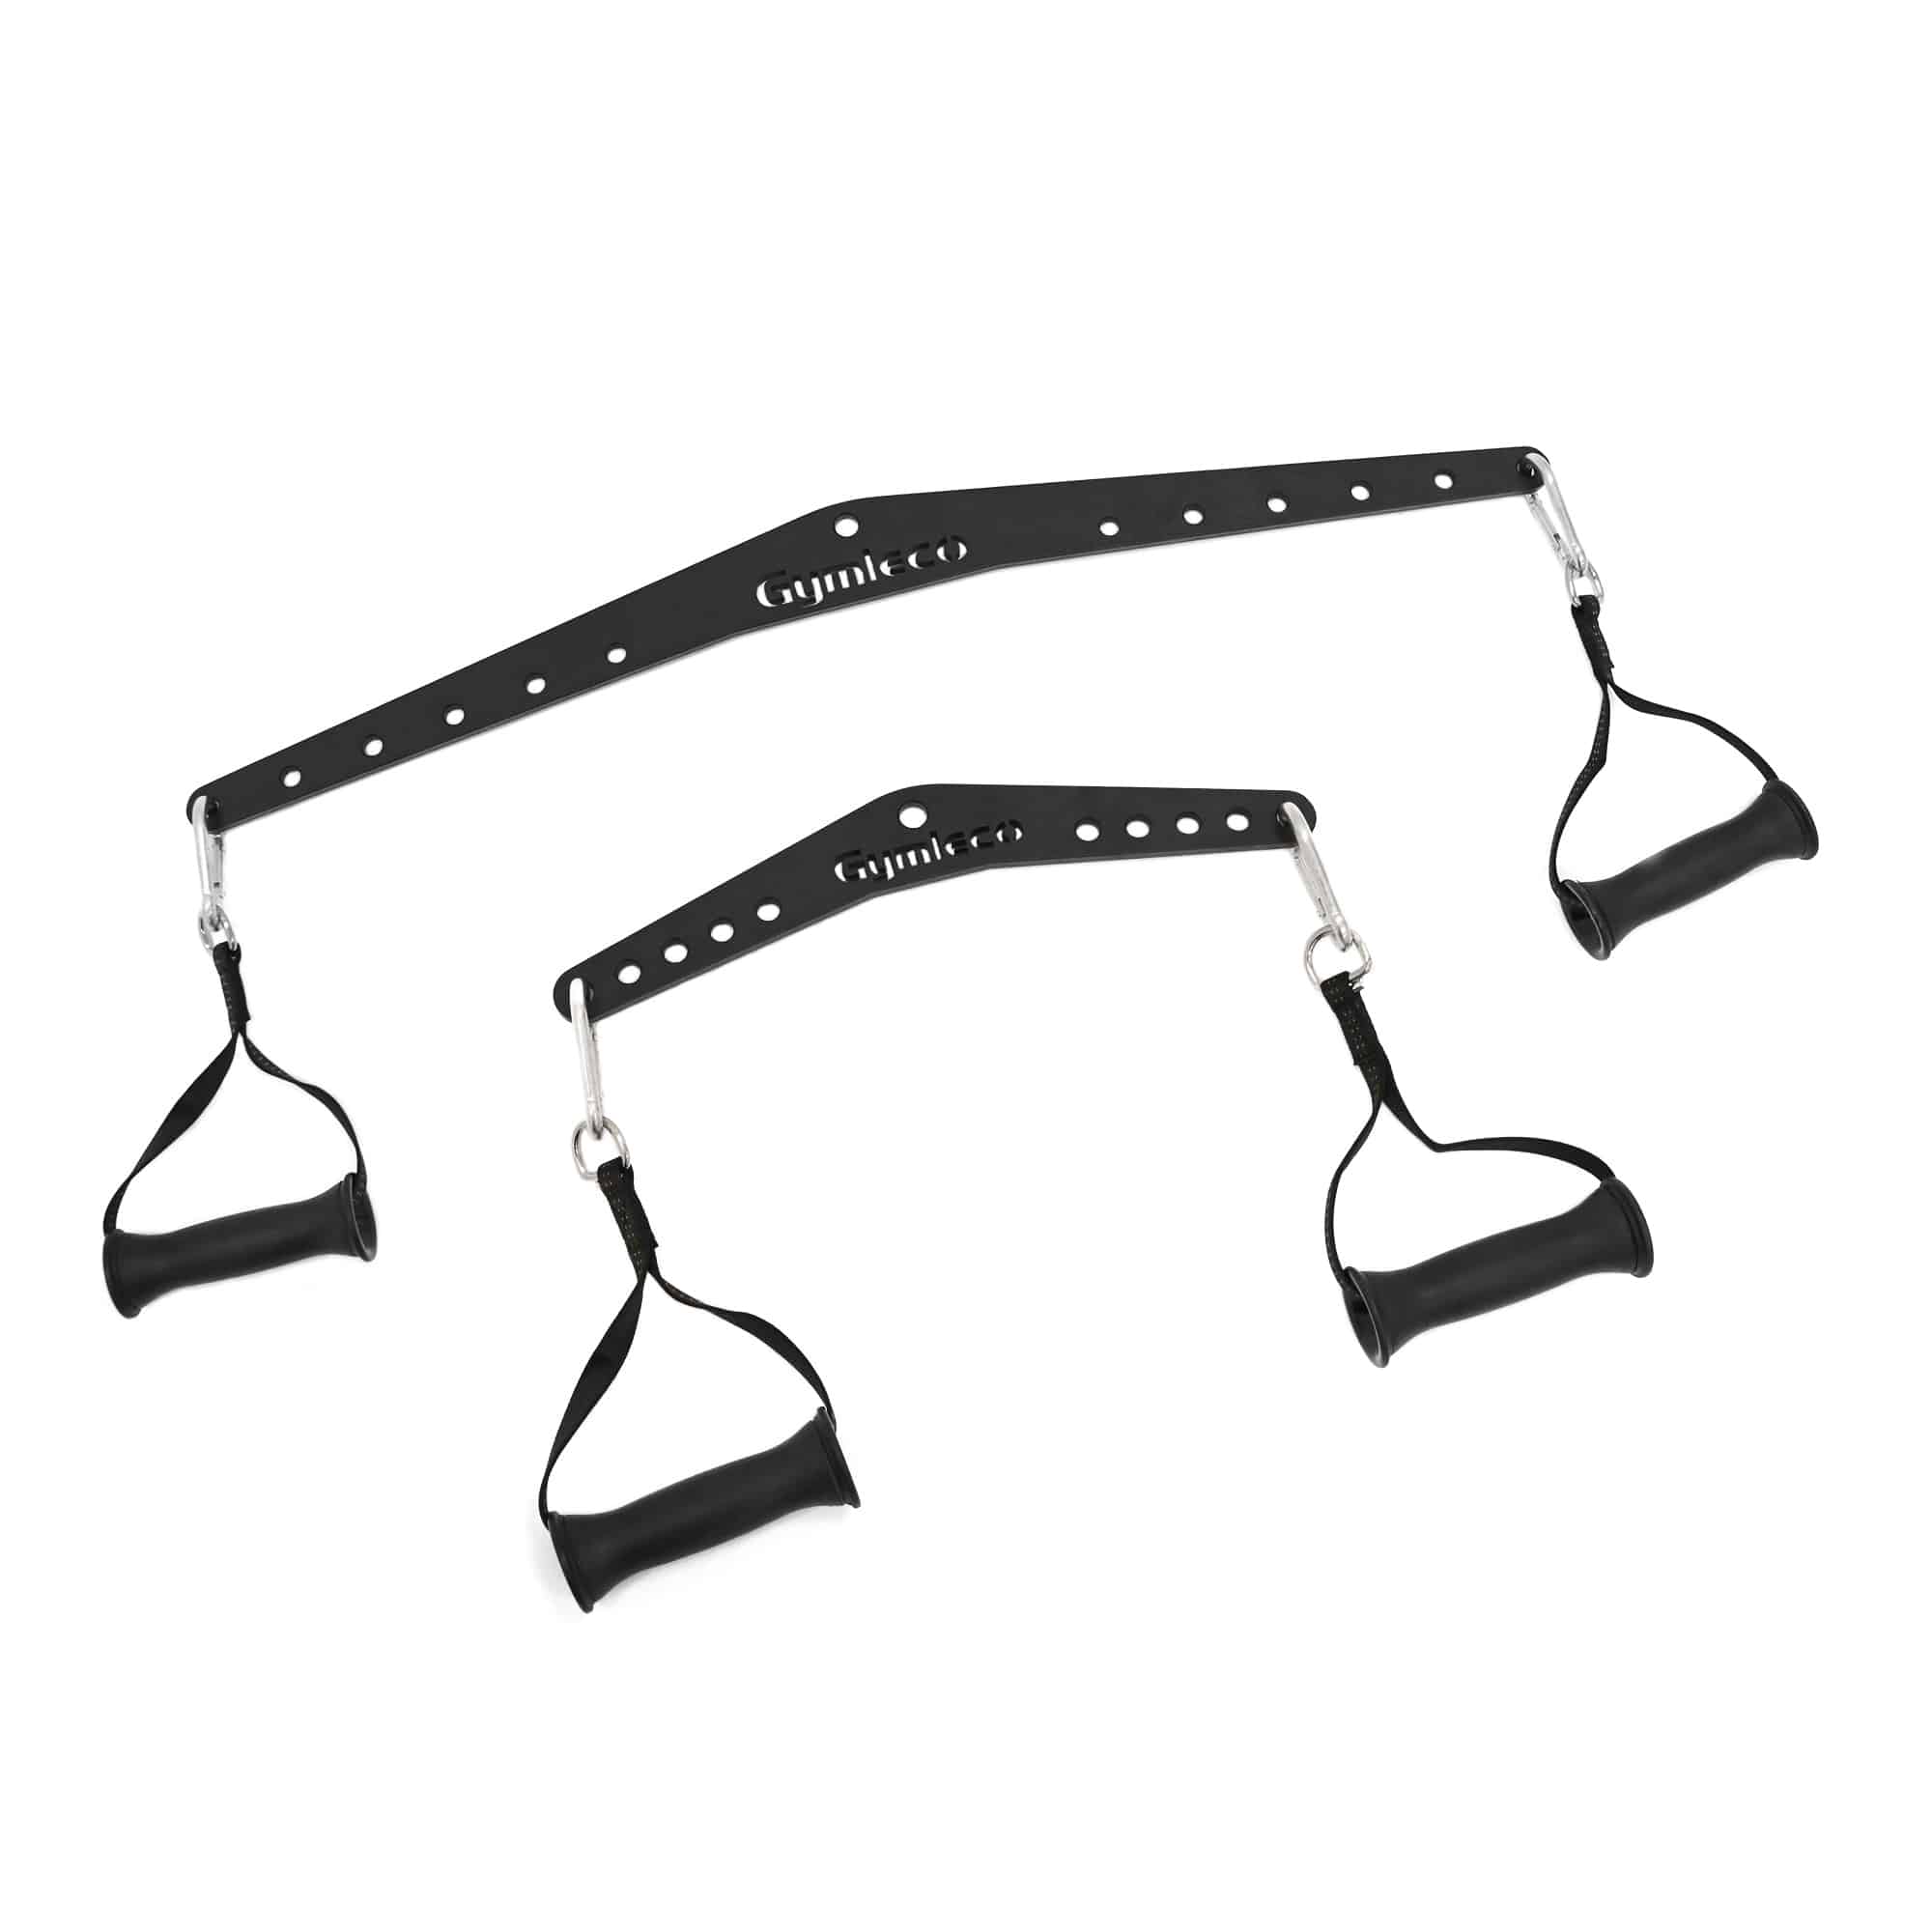 Multi hook handle bar - Gymleco Strength Equipment